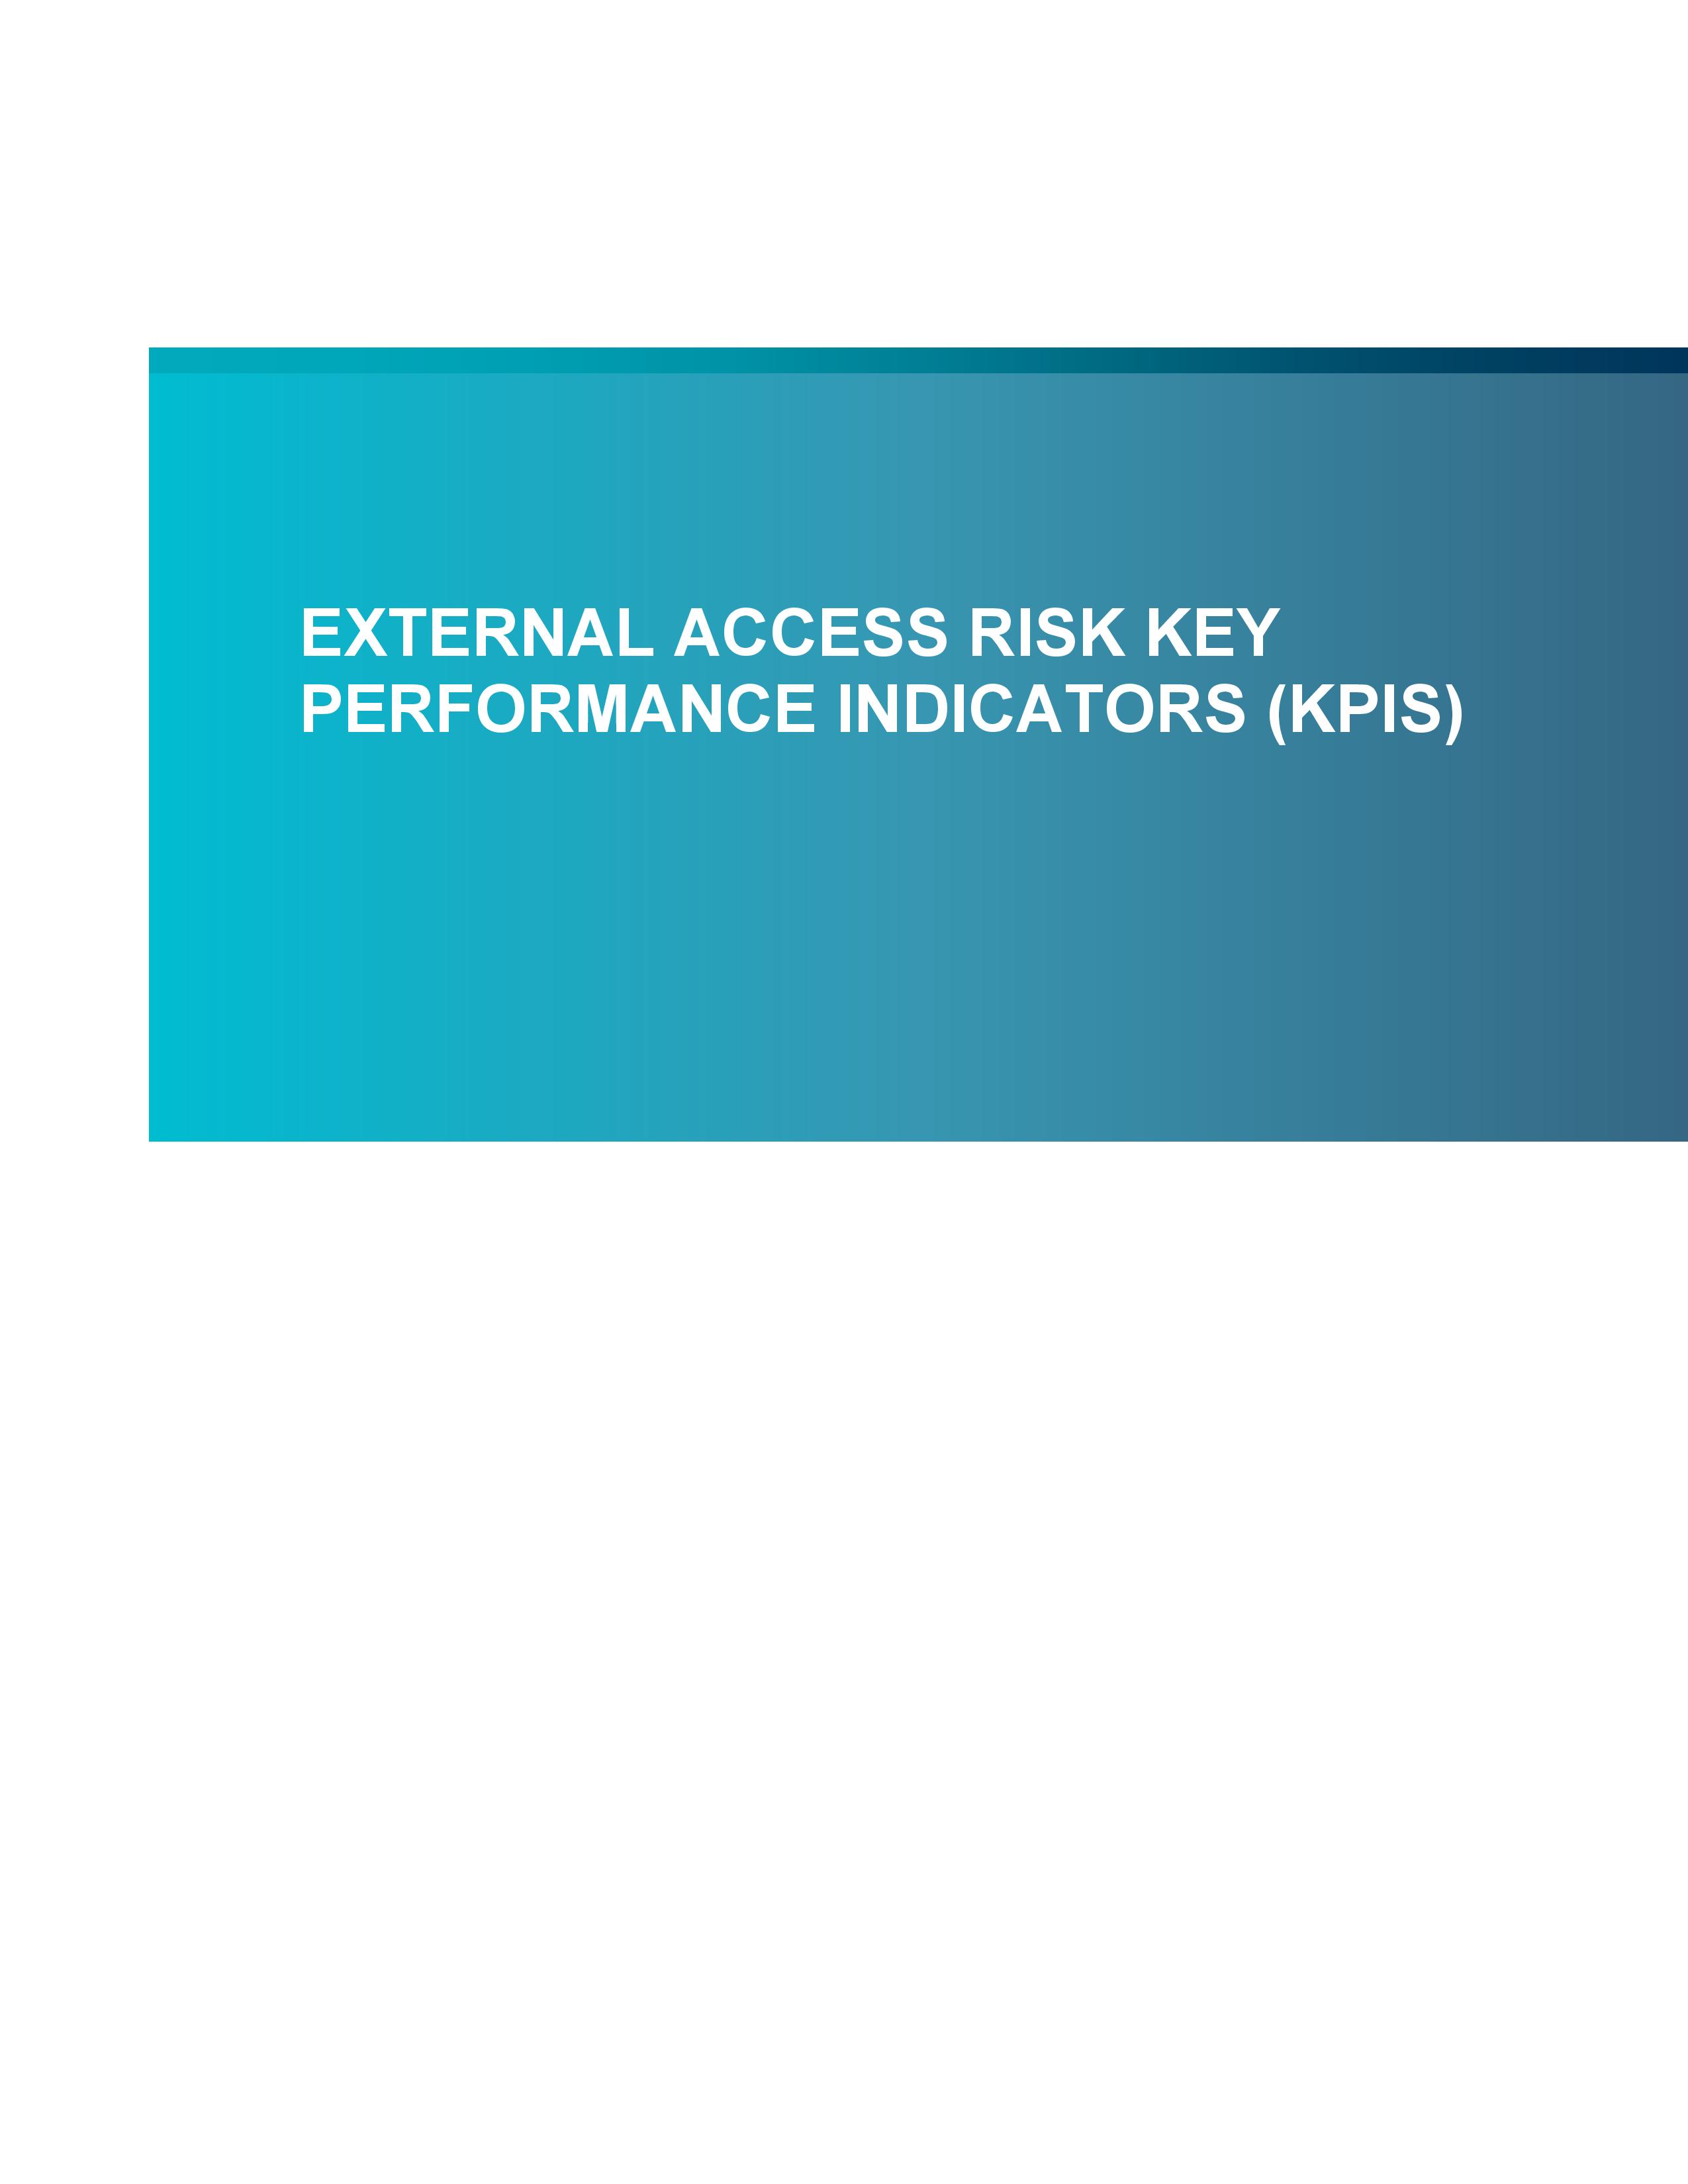 External Access Risk Key Performance Indicators (KPIs)